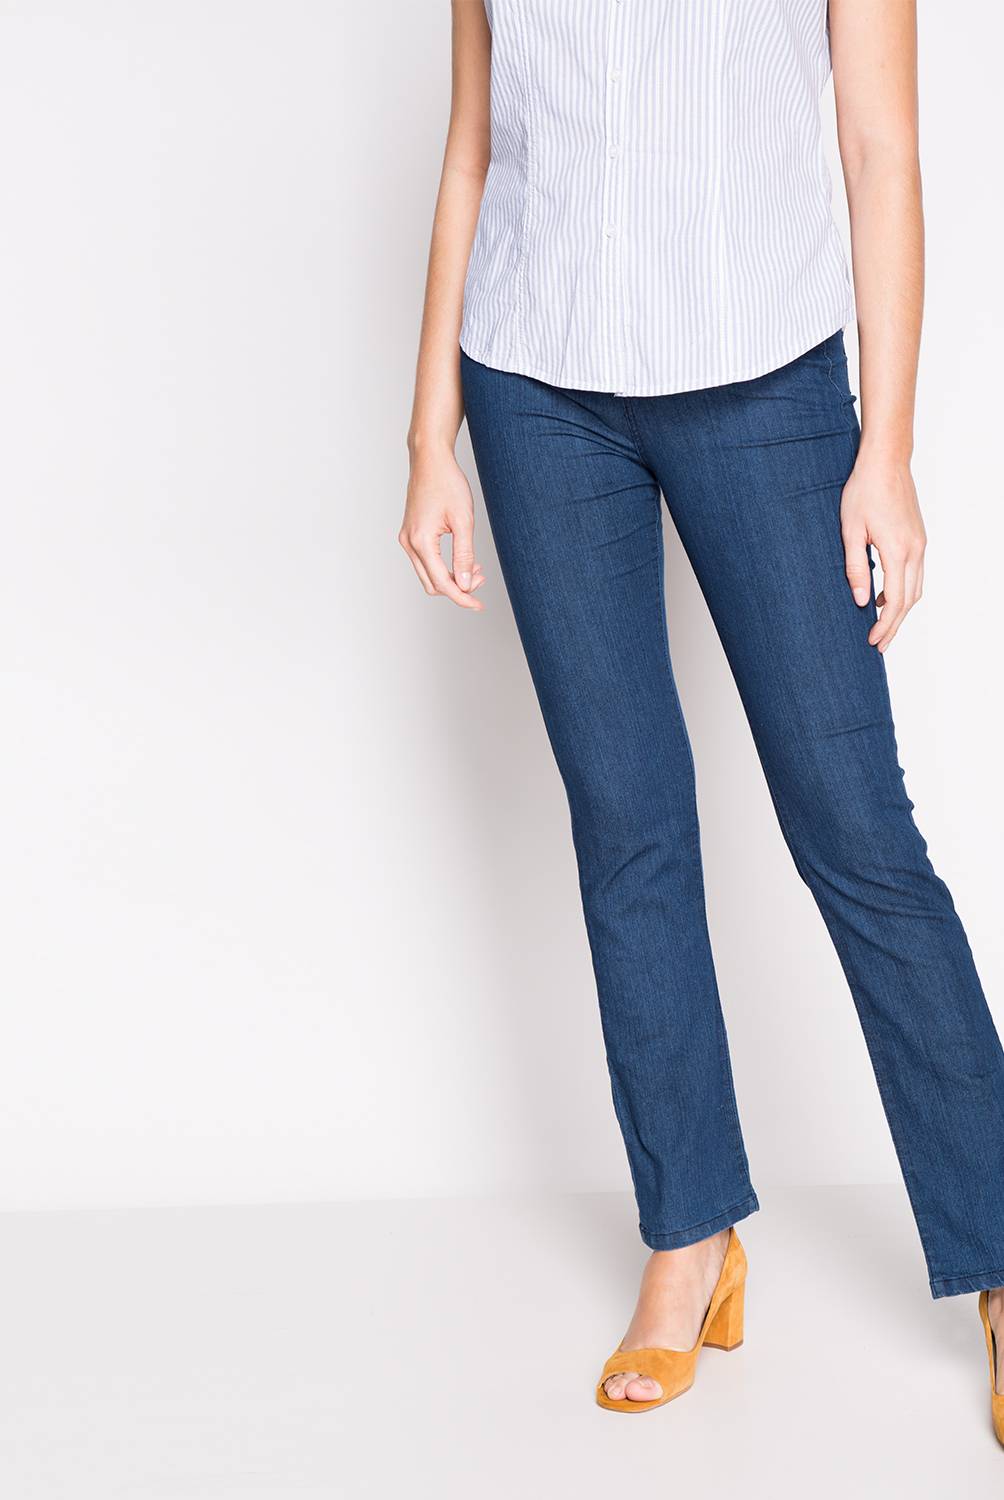 NEWPORT - Newport Jeans Recto Tiro Medio Mujer